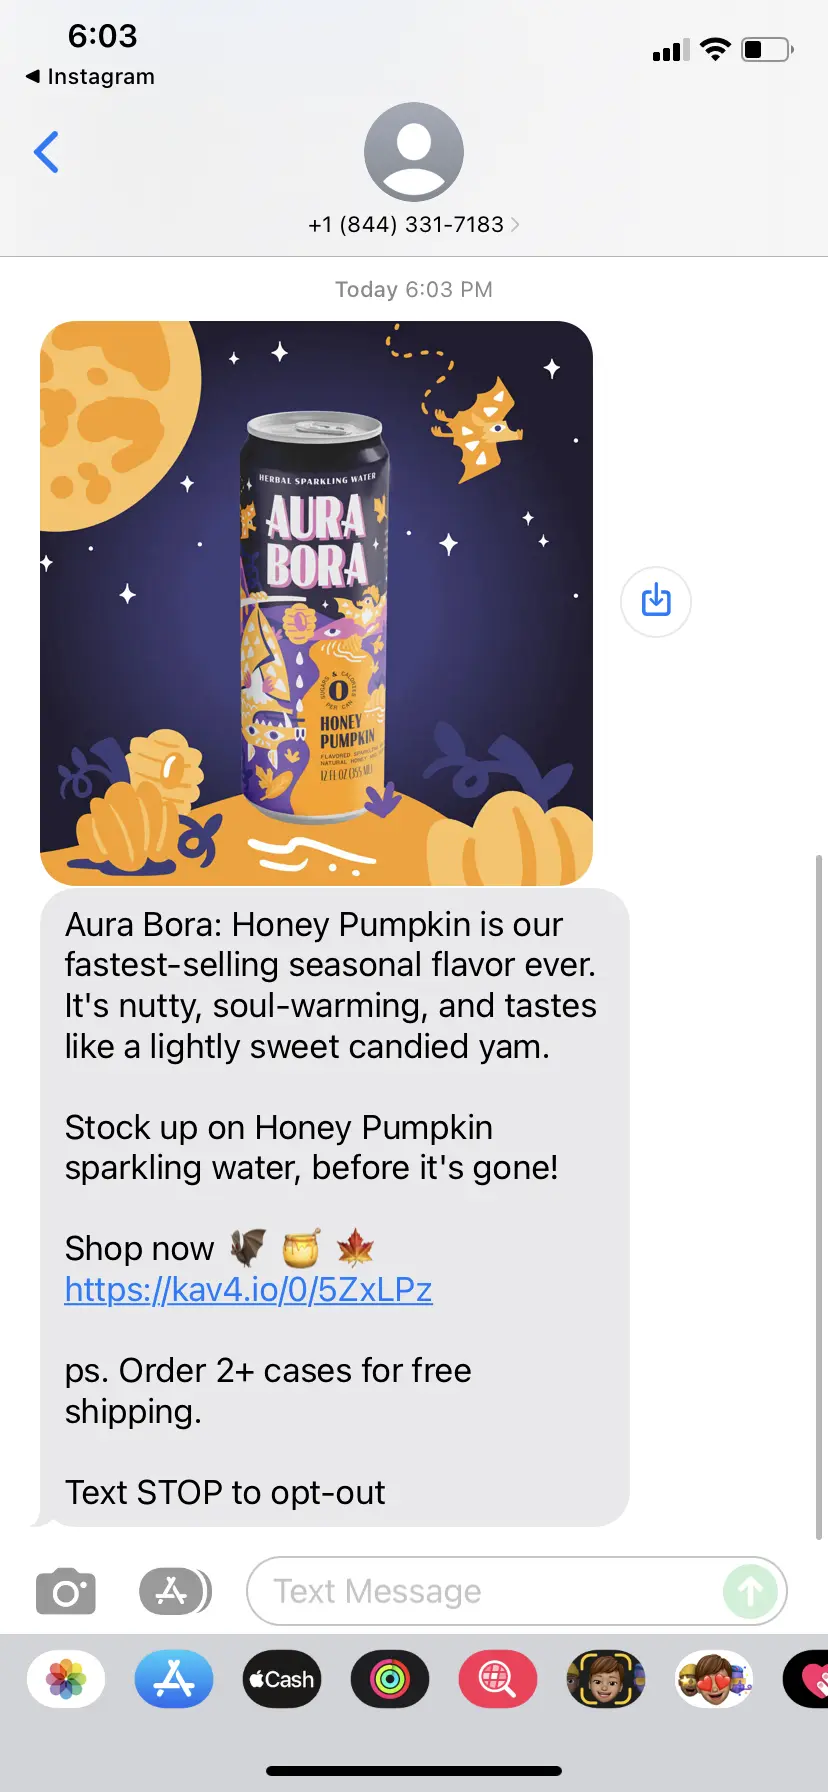 Text message from Aura Bora announcing limited edition flavor, Honey Pumpkin.